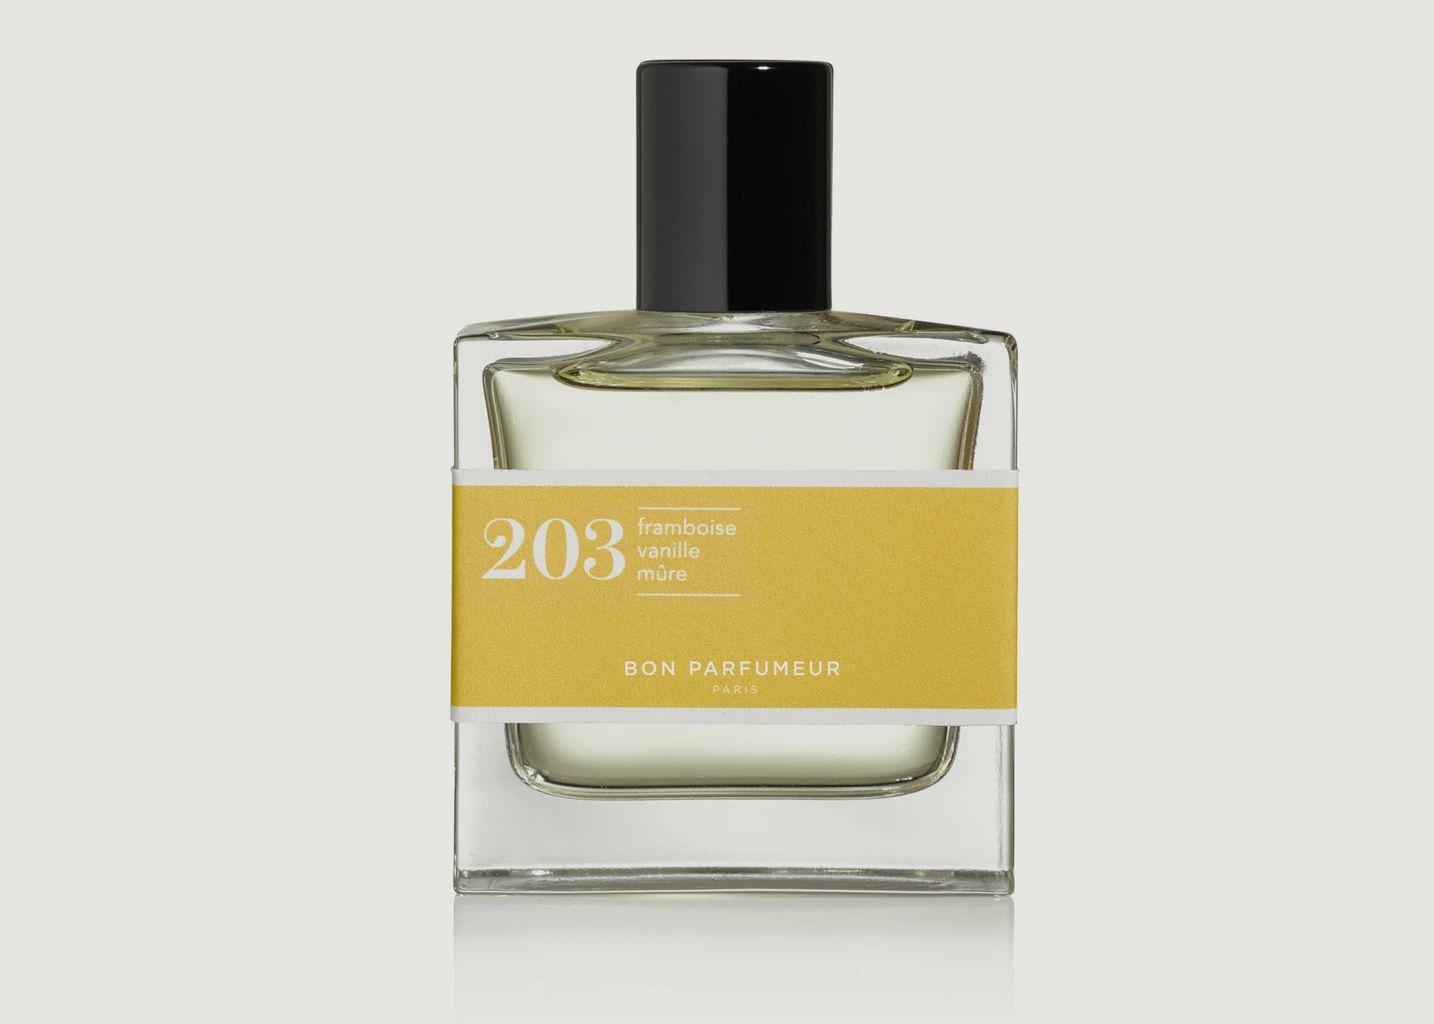 203 Raspberry, Vanilla - Bon Parfumeur